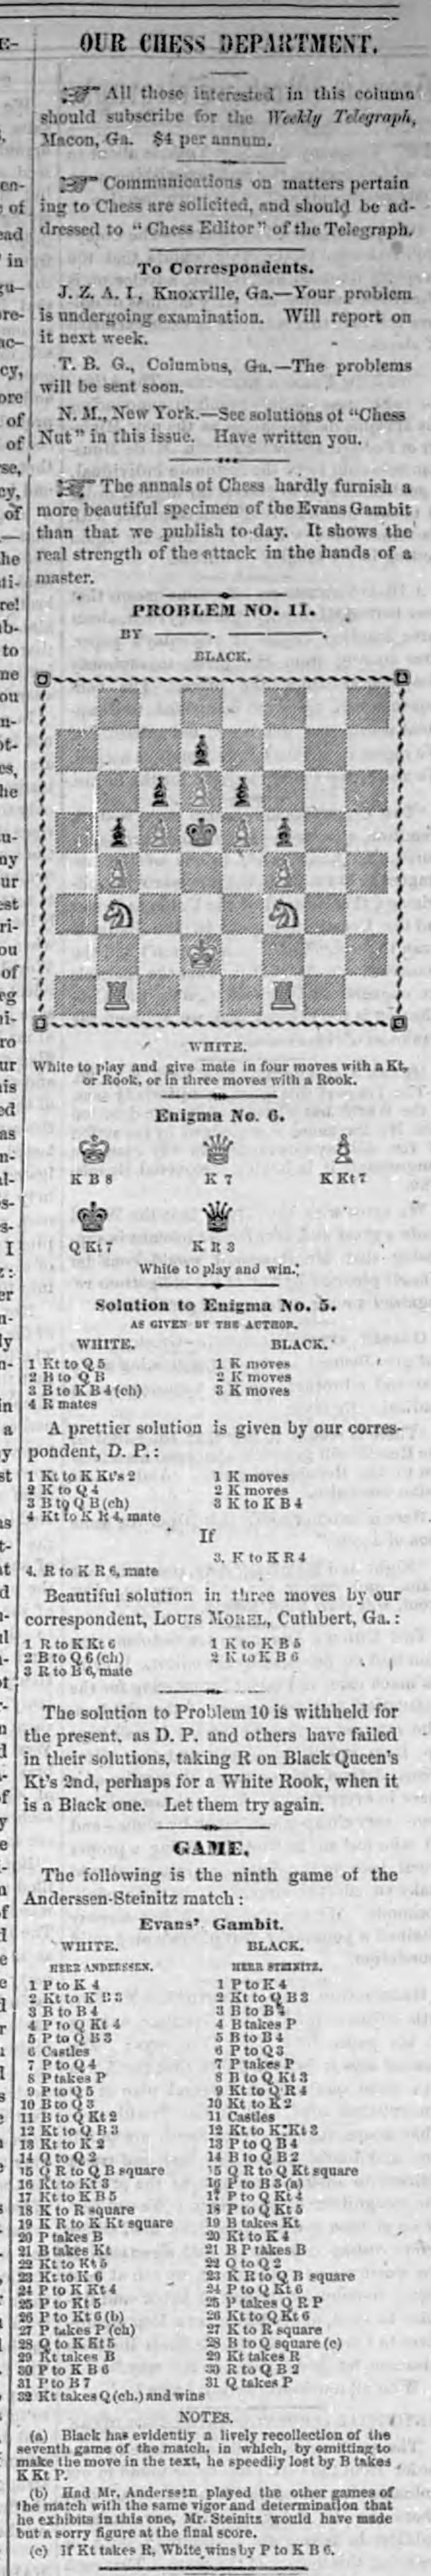 1866.10.01-01 Macon Georgia Weekly Telegraph.jpg